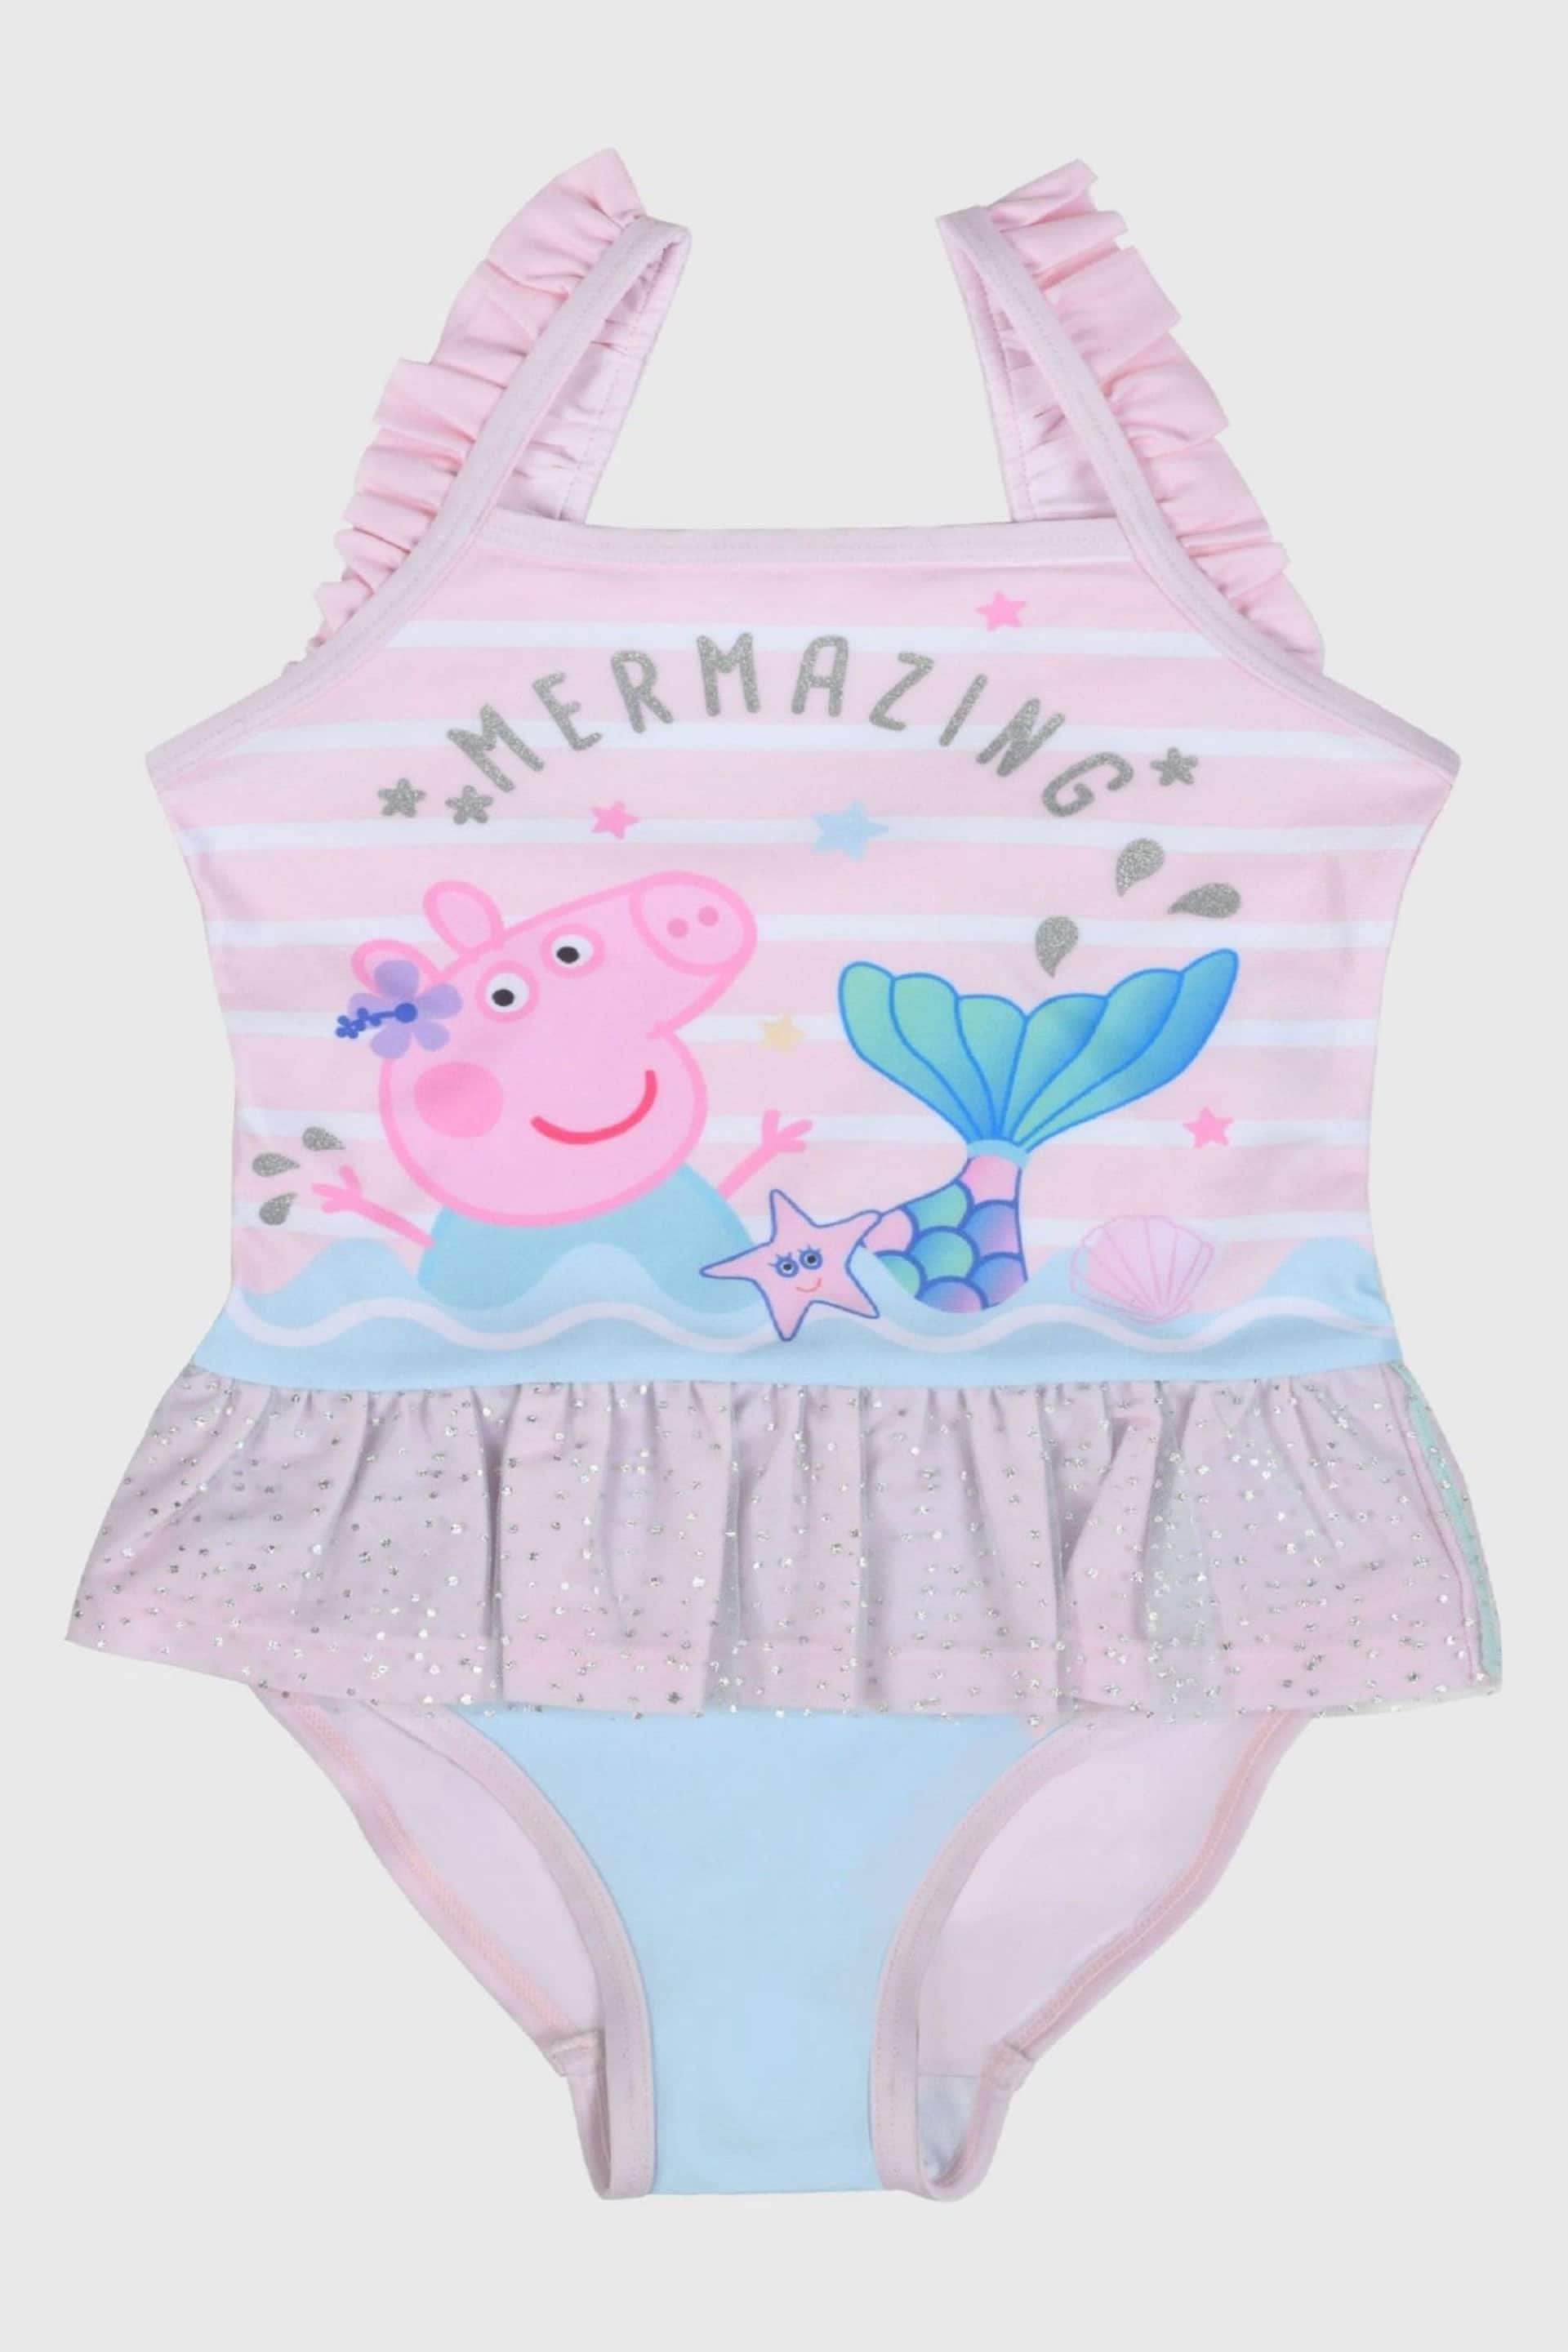 Brand Threads Pink Peppa Pig Girls Swimming Costume - Image 1 of 5